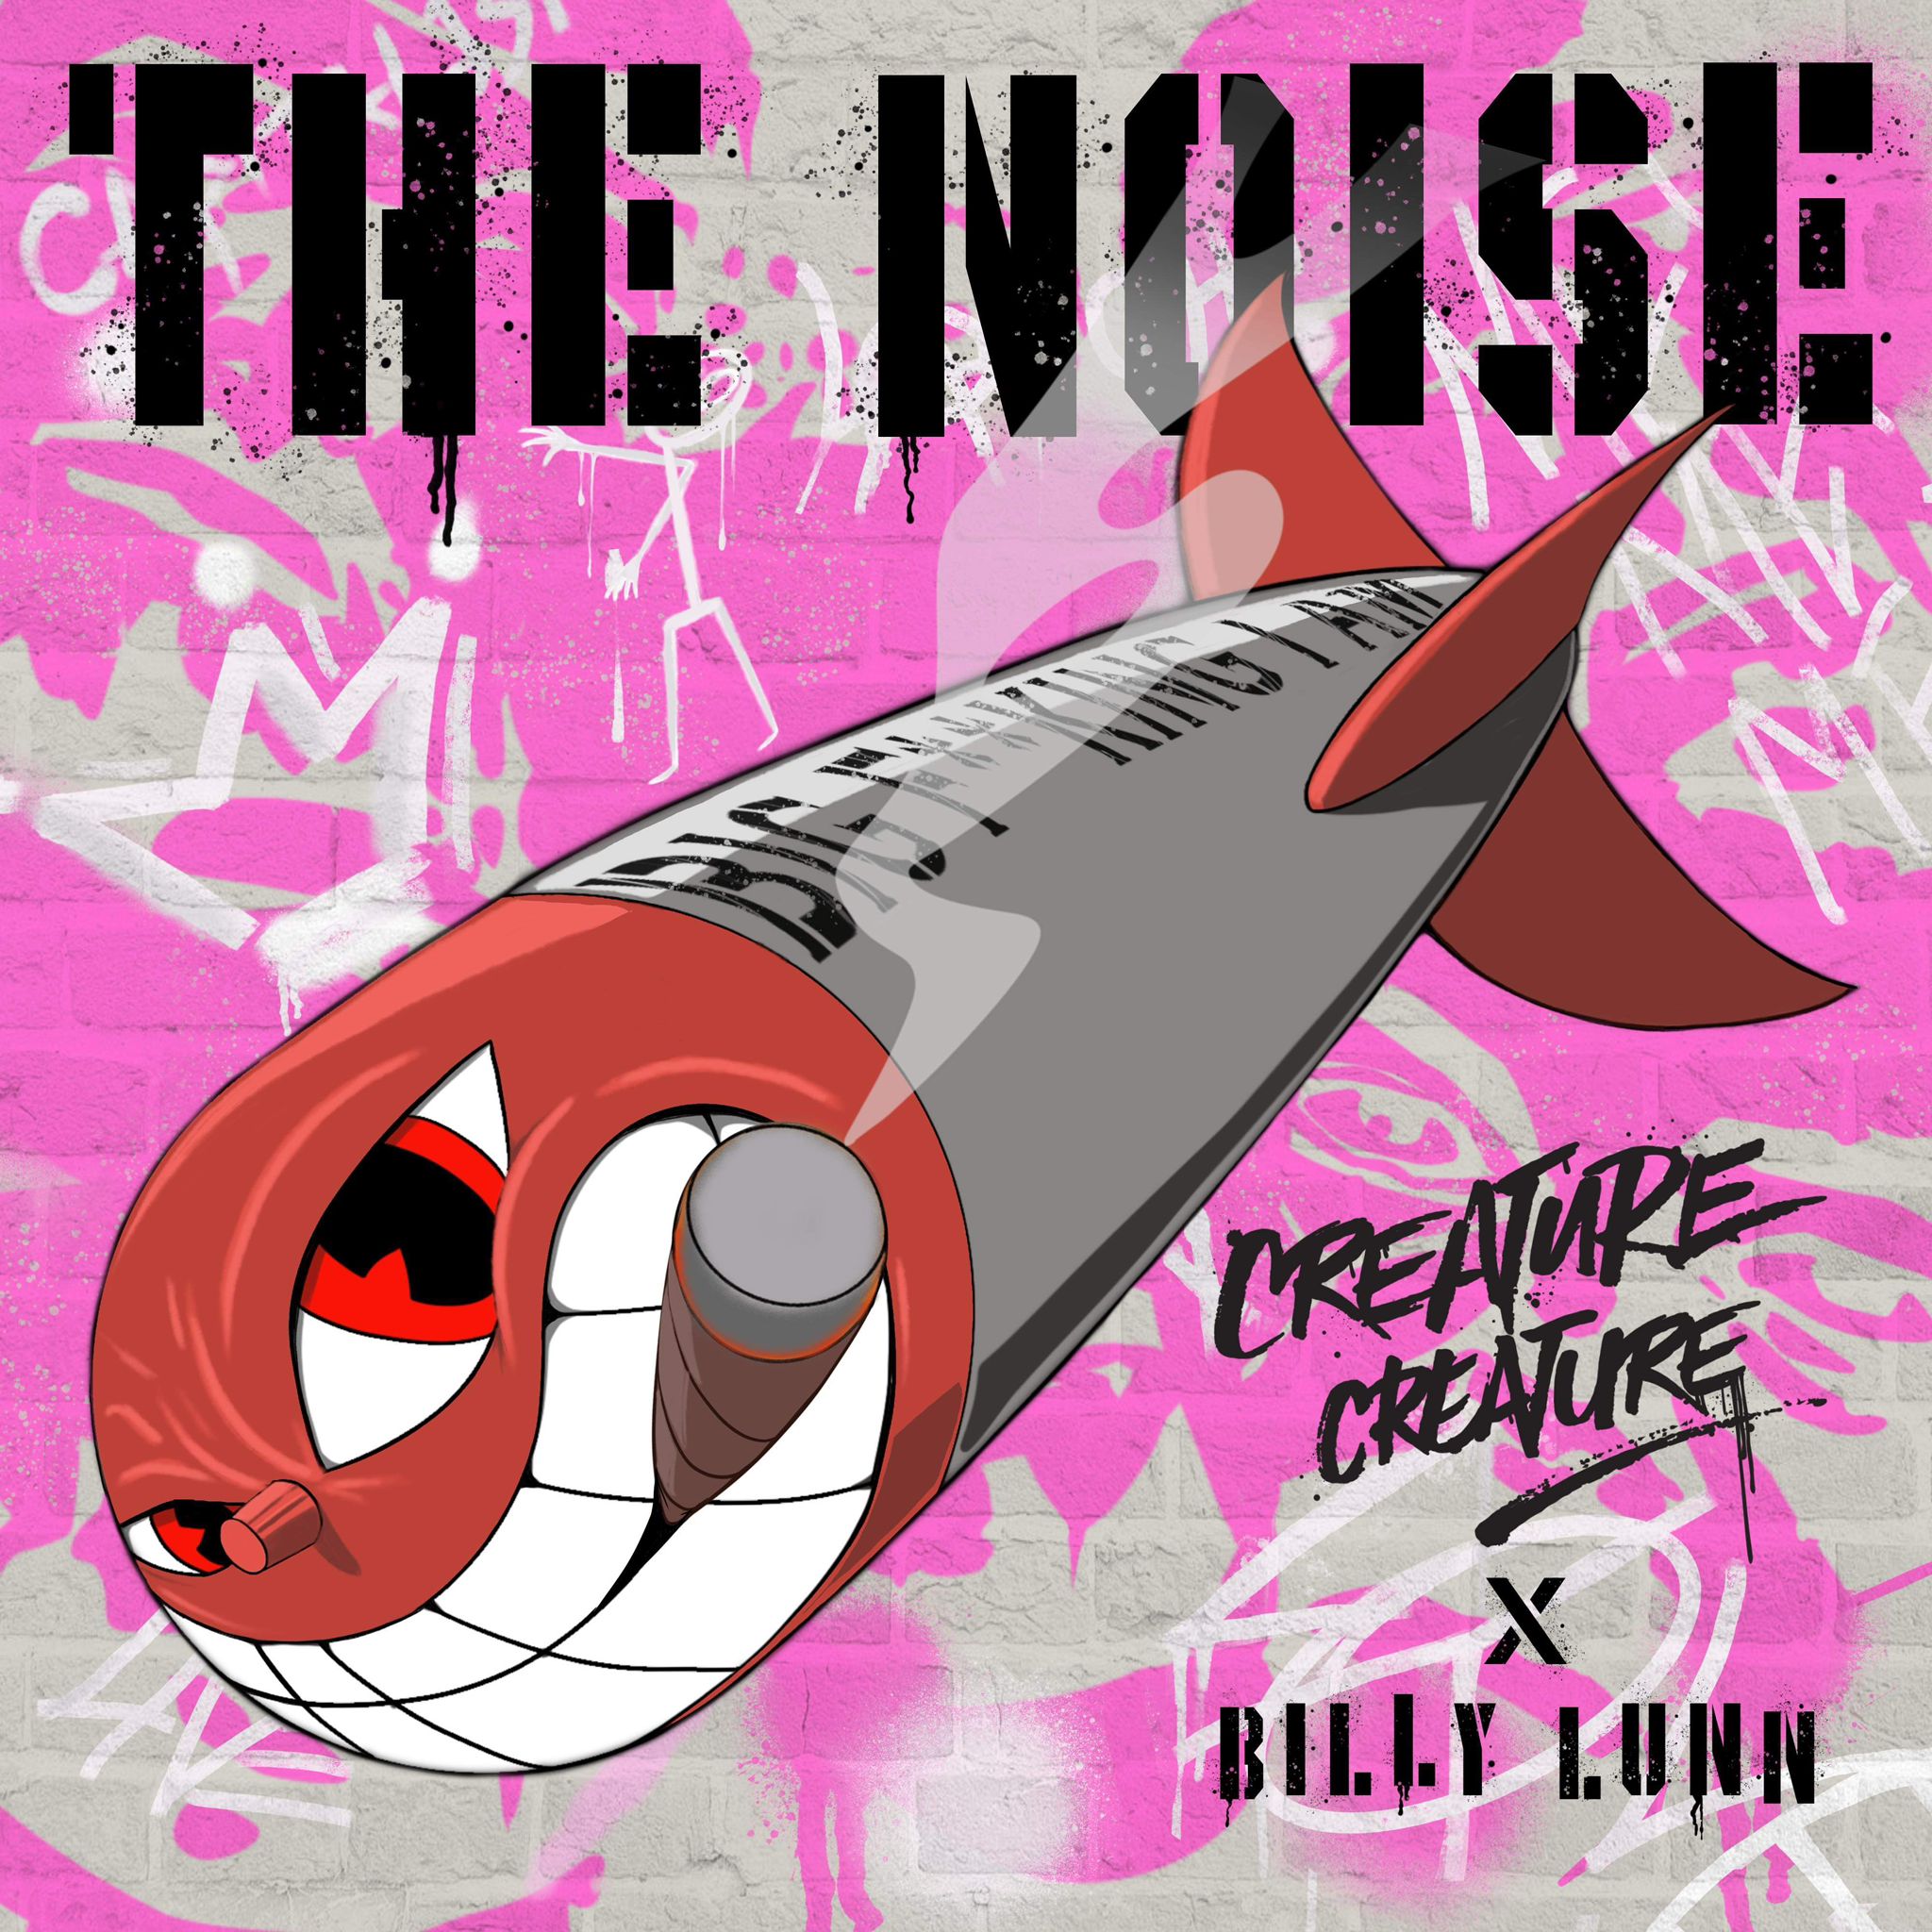 Creature Creature "The Noises" single artwork